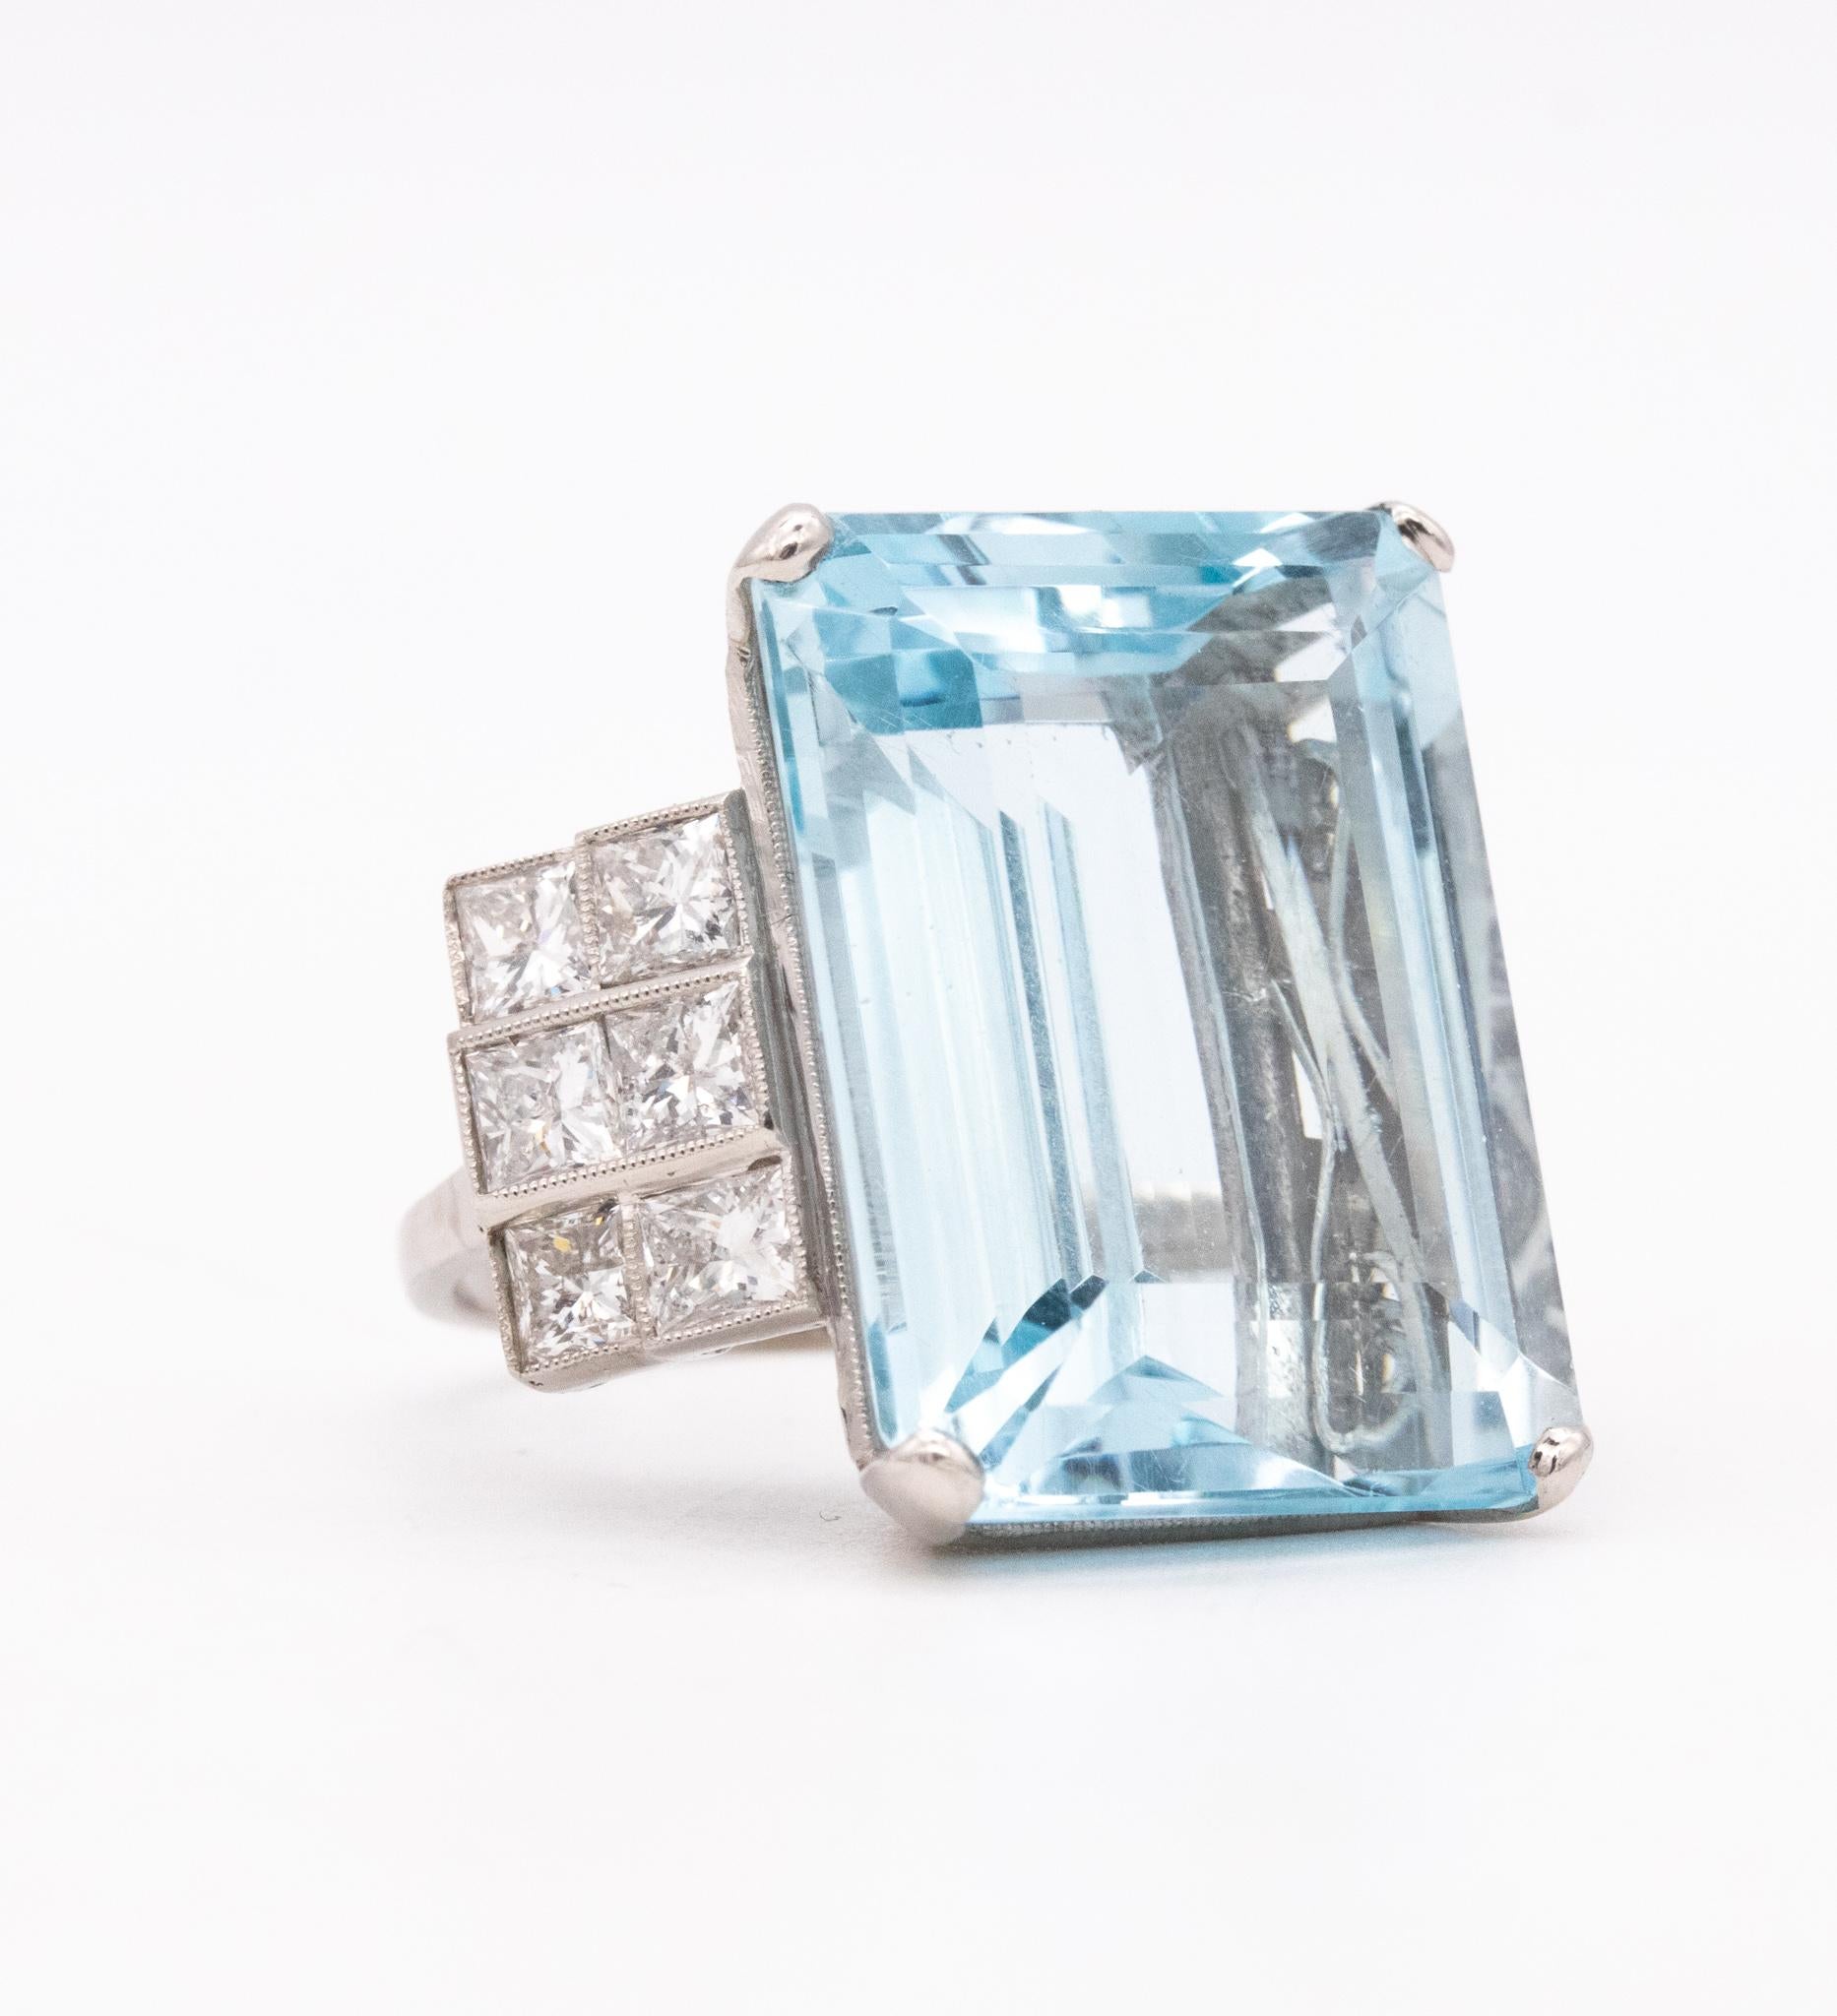 Platinum 1938 Art Deco Statement Ring with 28.44 Cts in Aquamarine and Diamonds 2